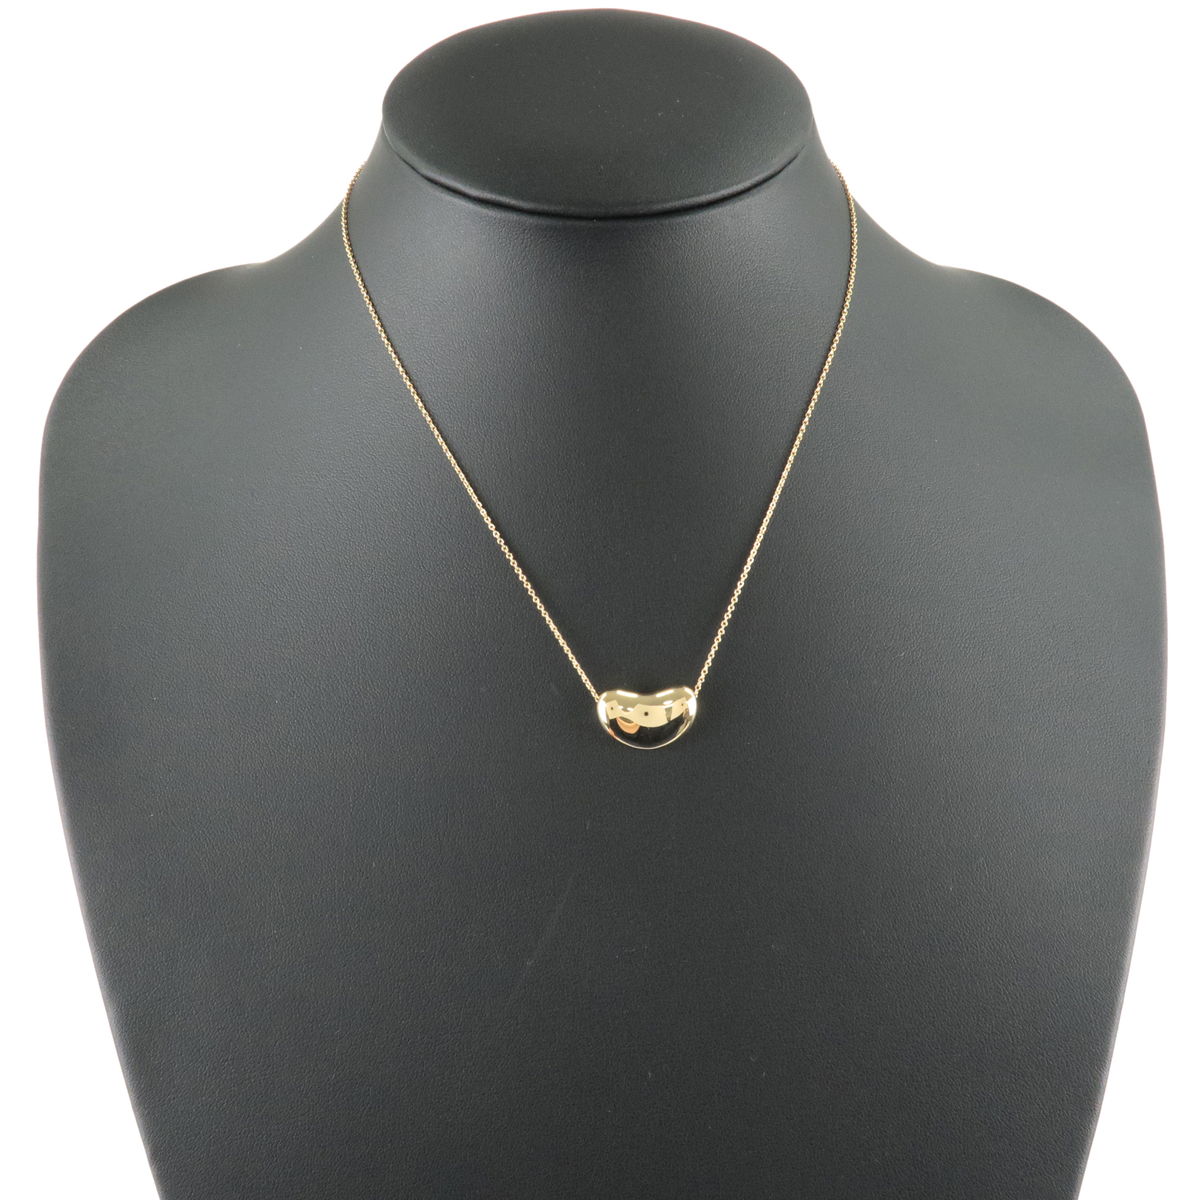 Tiffany & Co. Elsa Peretti 18K Yellow Gold 11mm Bean Pendant Necklace - 16